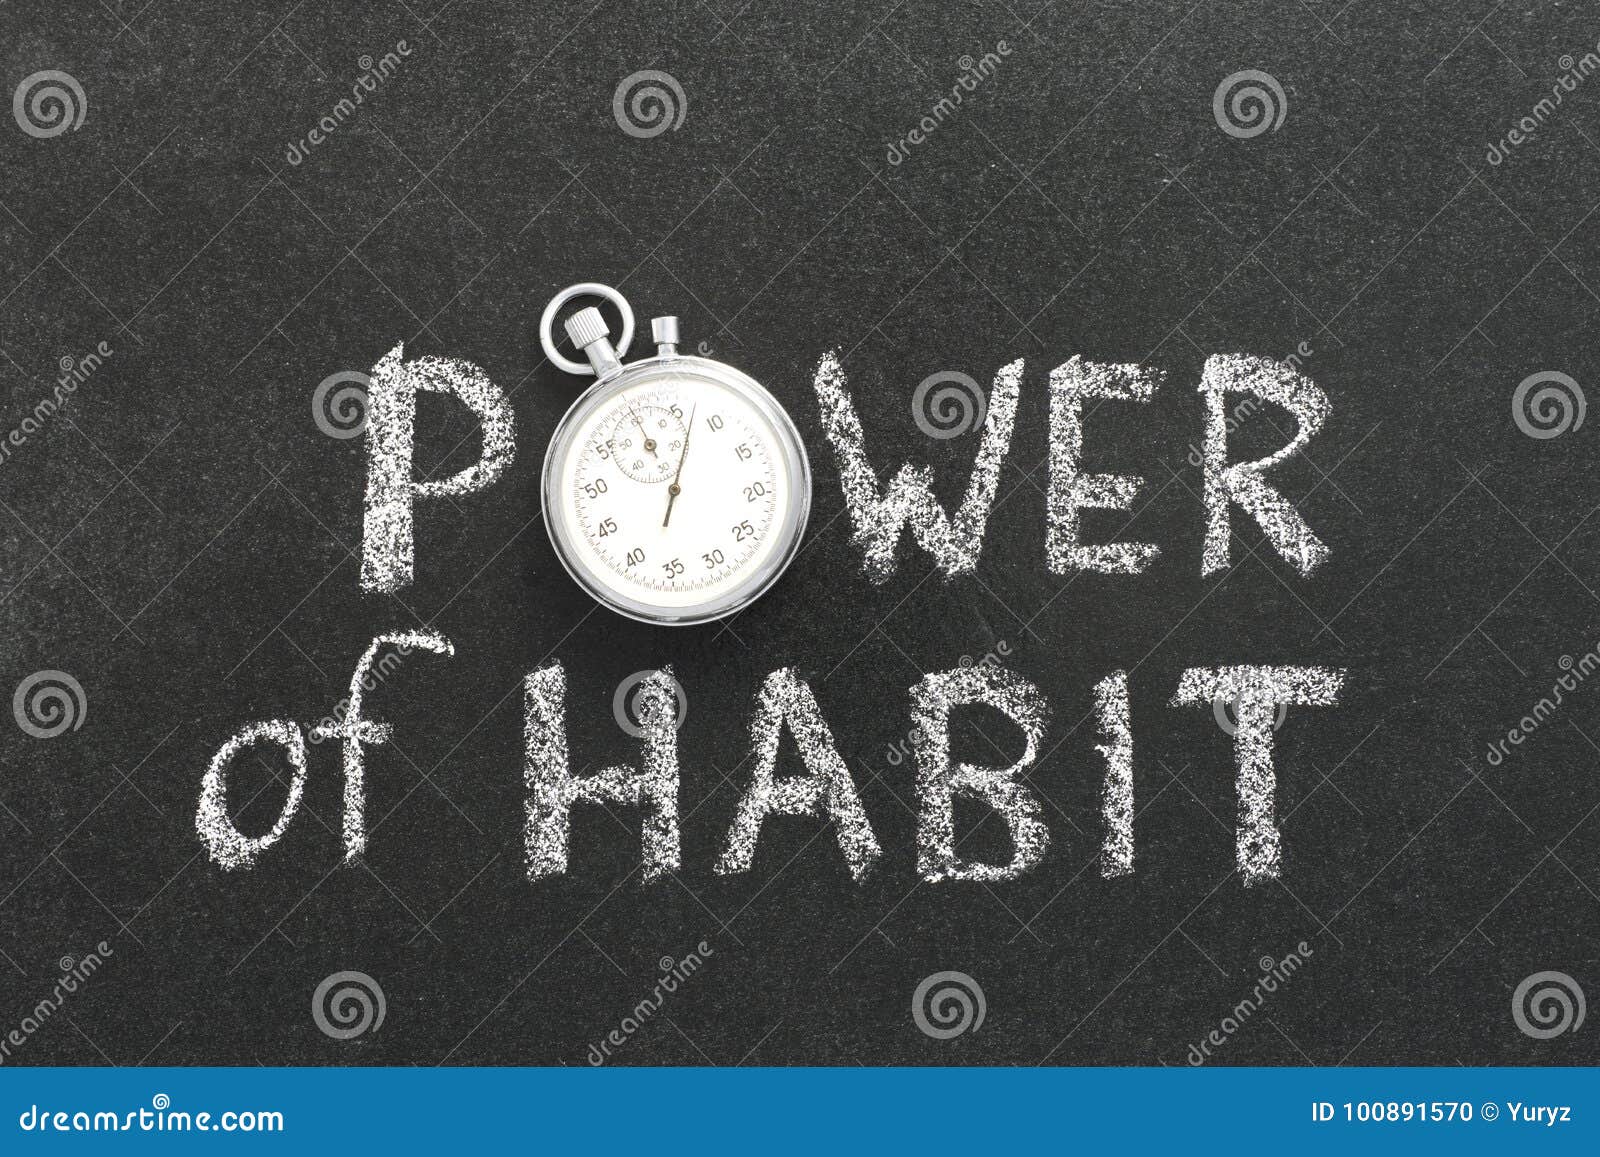 power of habit watch